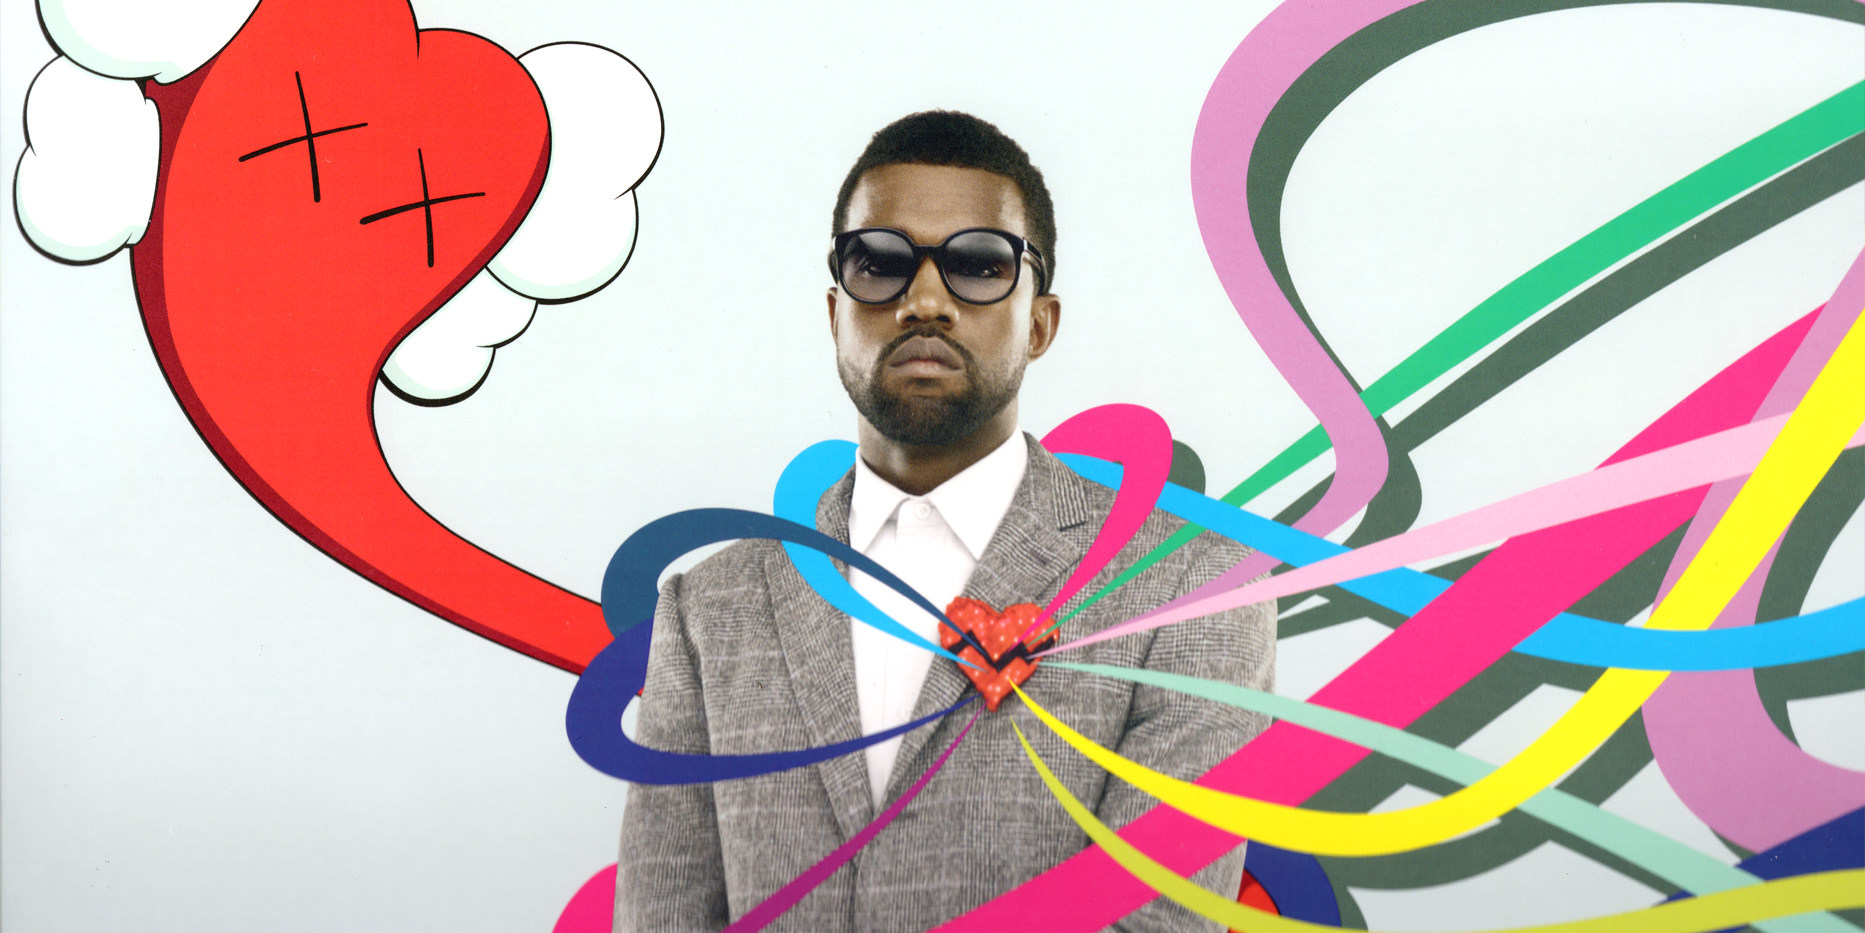 808s Heartbreak by Kanye West on Amazon Music - Amazoncom